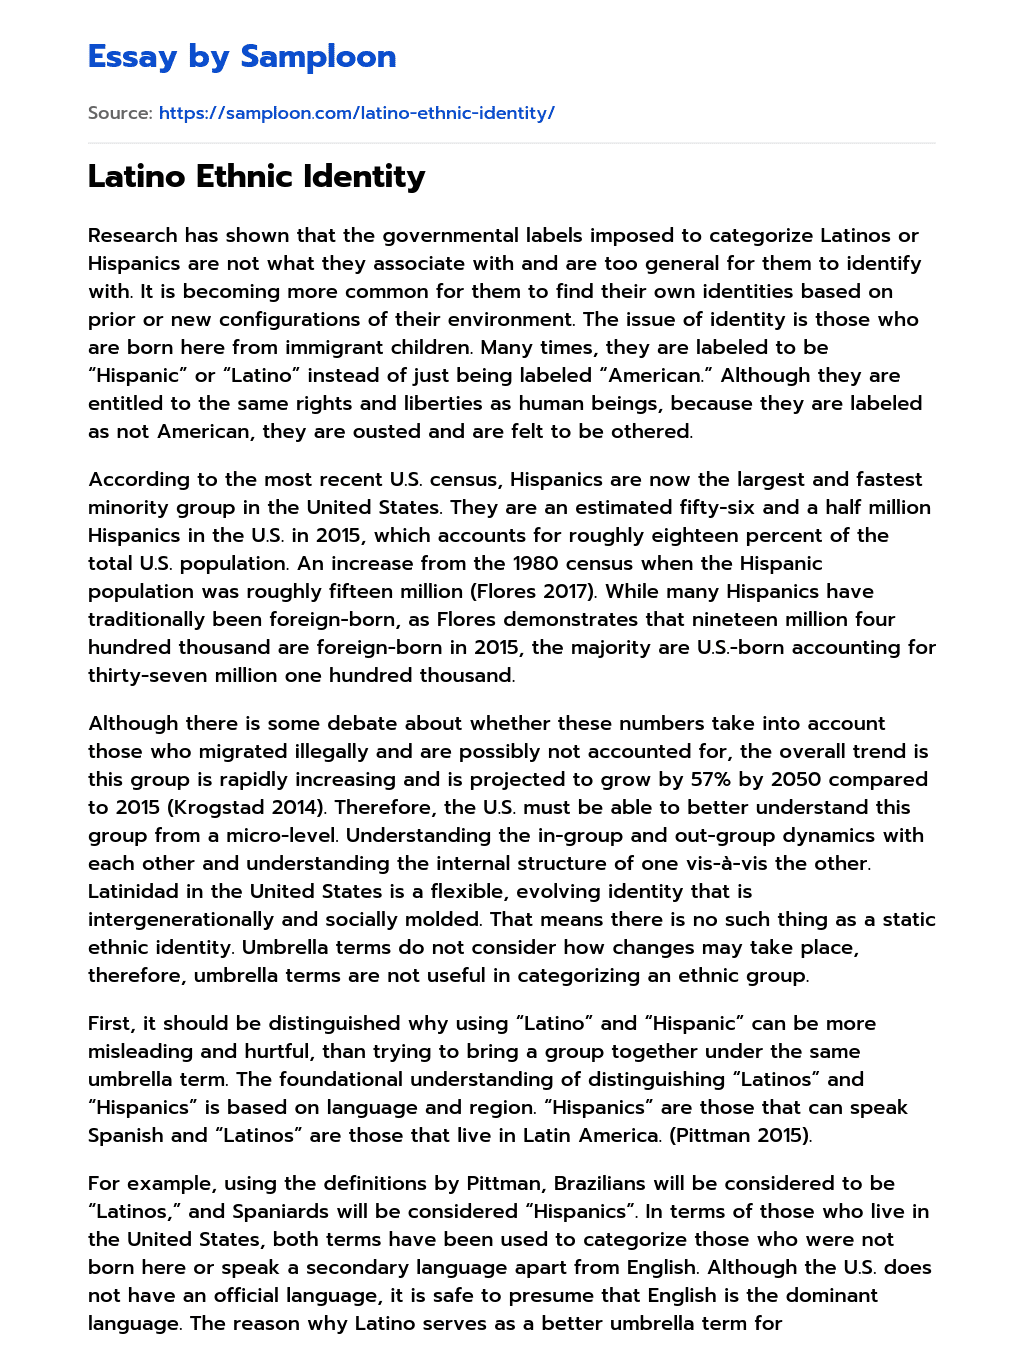 Latino Ethnic Identity essay